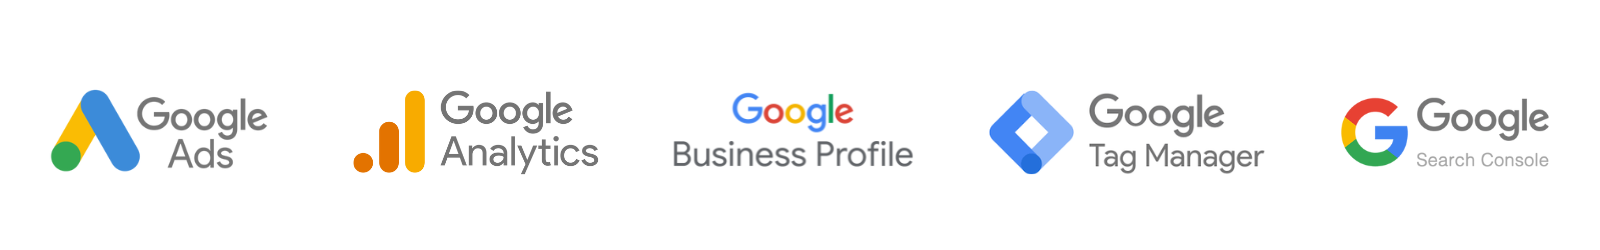 image of google product logos